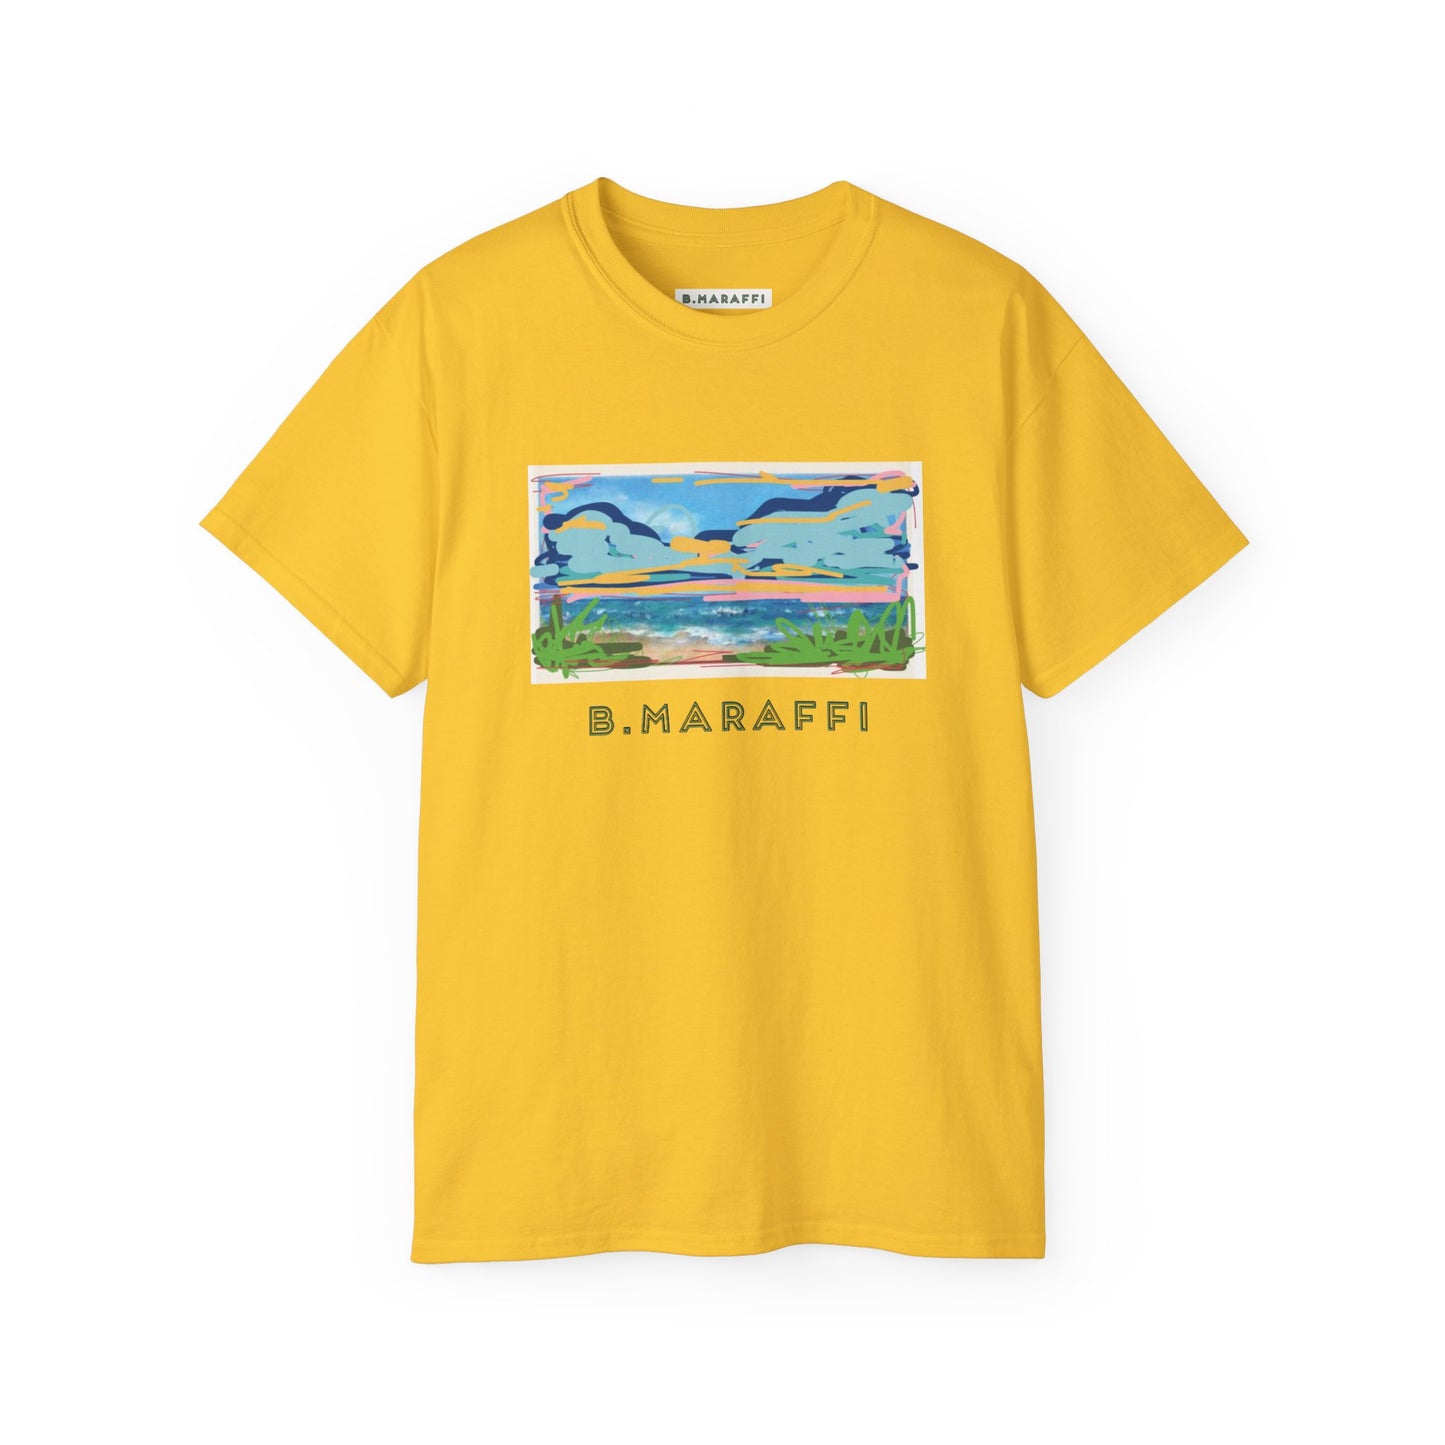 B.Maraffi Cotton T-shirt - Just Beachy